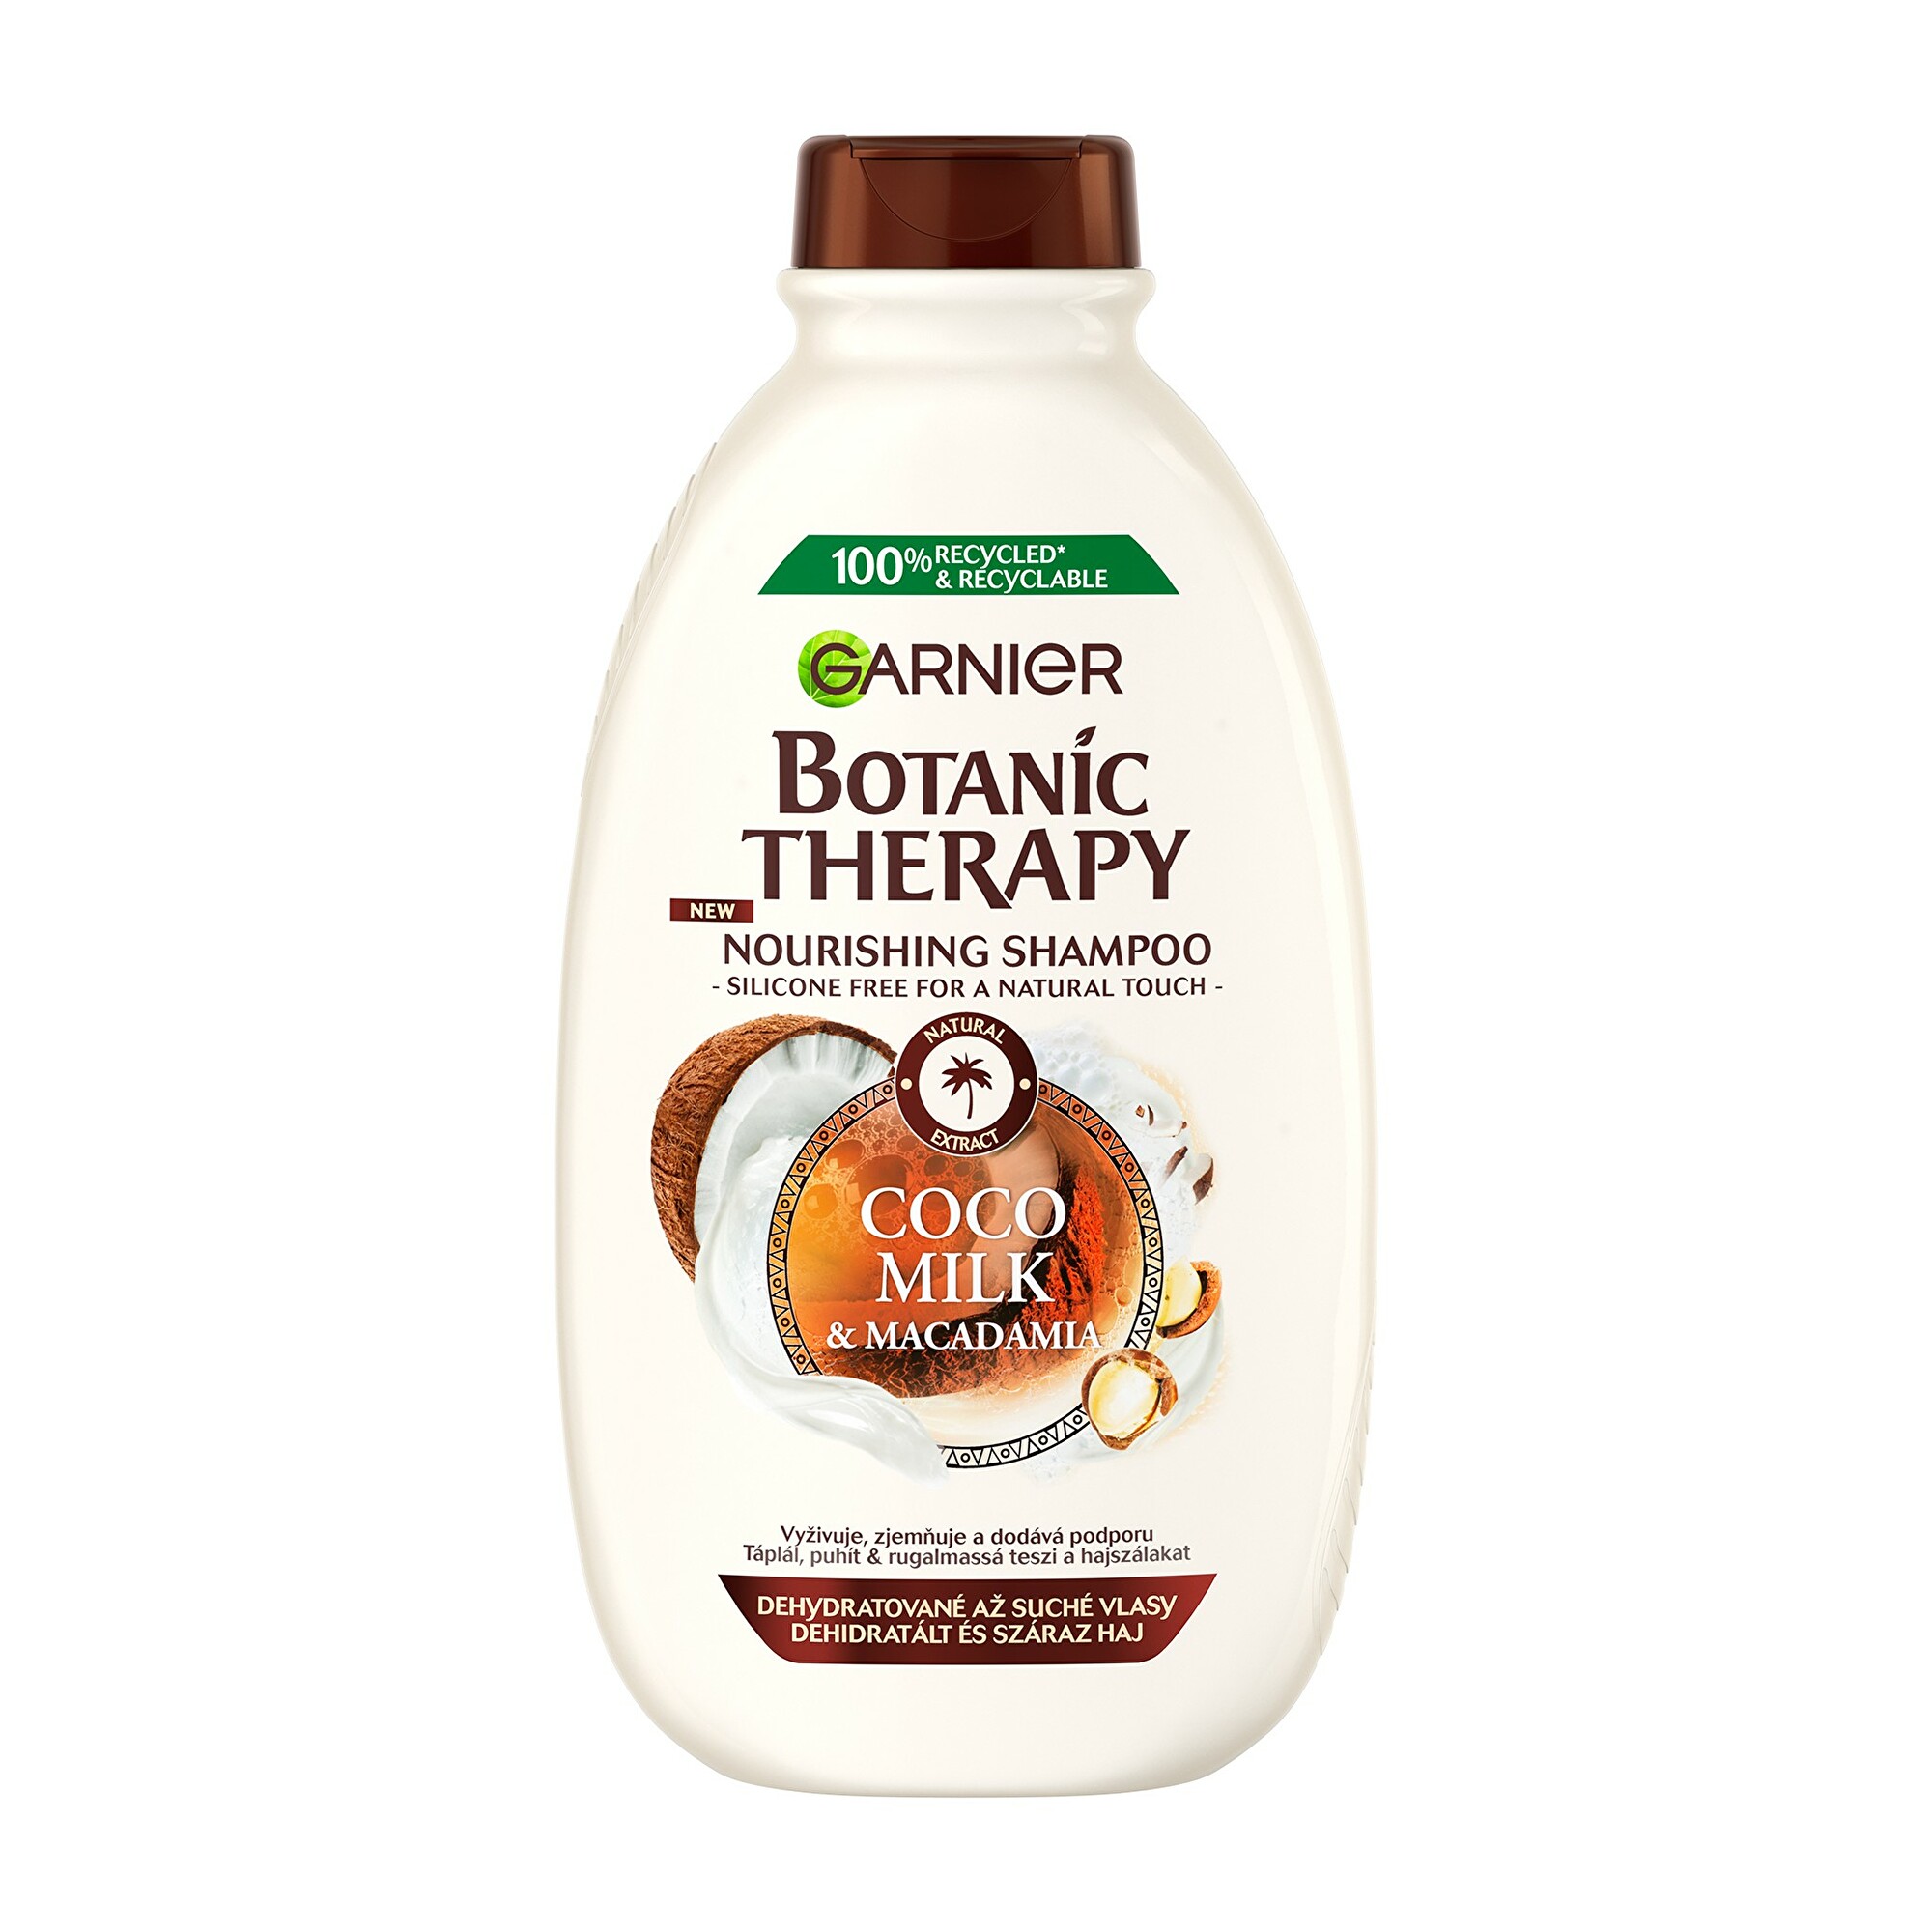 Garnier Vyživující a zvláčňující šampon pro suché a hrubé vlasy Botanic Therapy (Coco Milk & Macadamia Shampoo) 400 ml